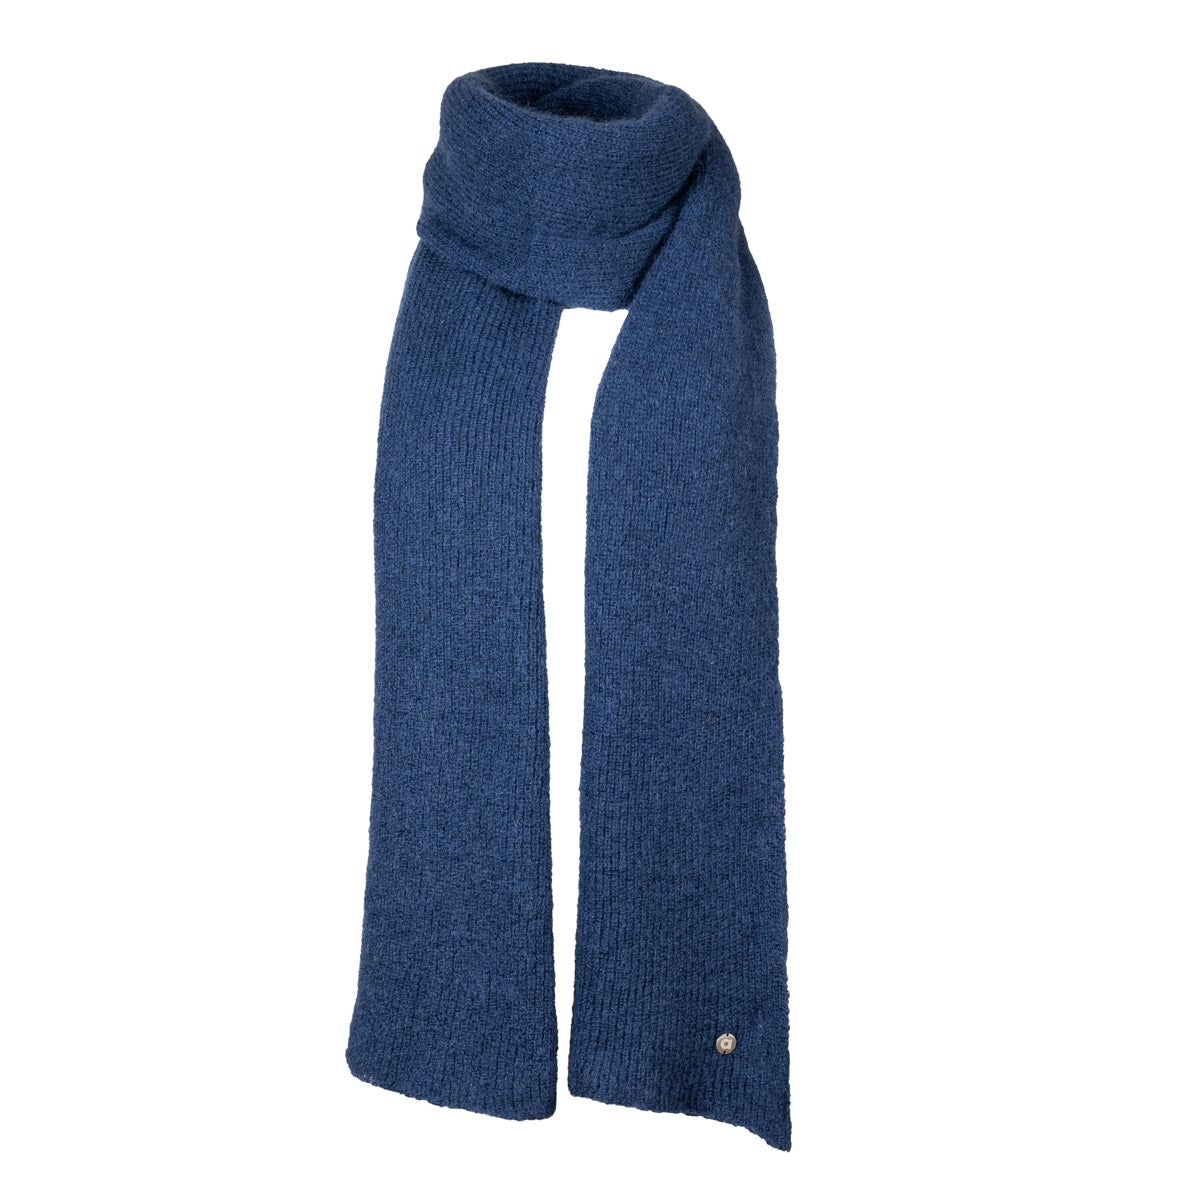 Teresa scarf, blue